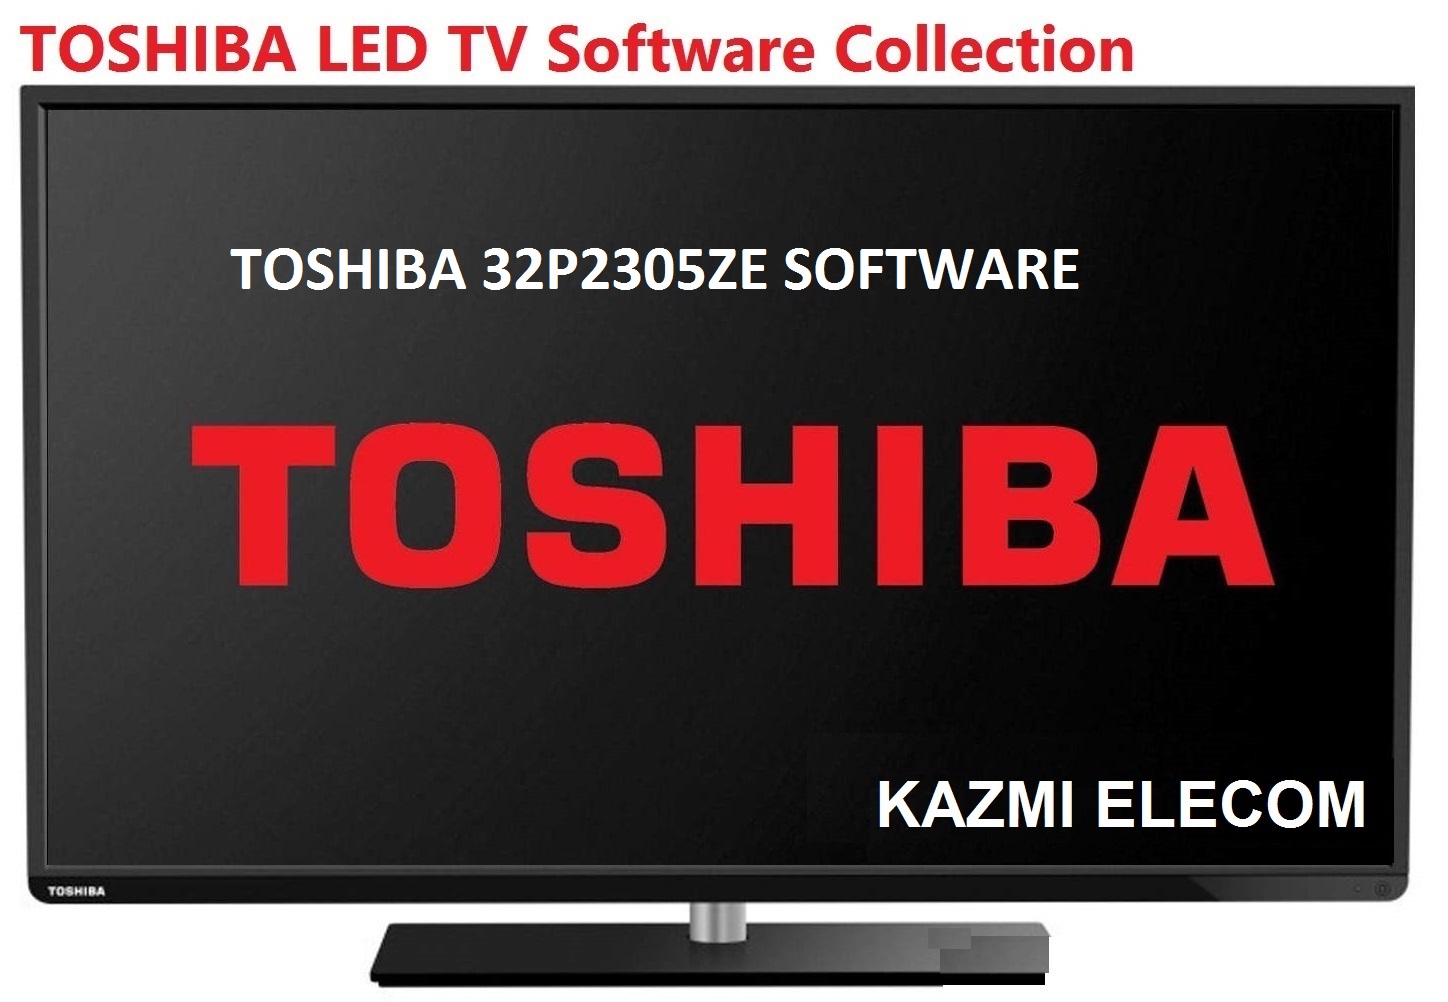 Toshiba 32P2305Ze